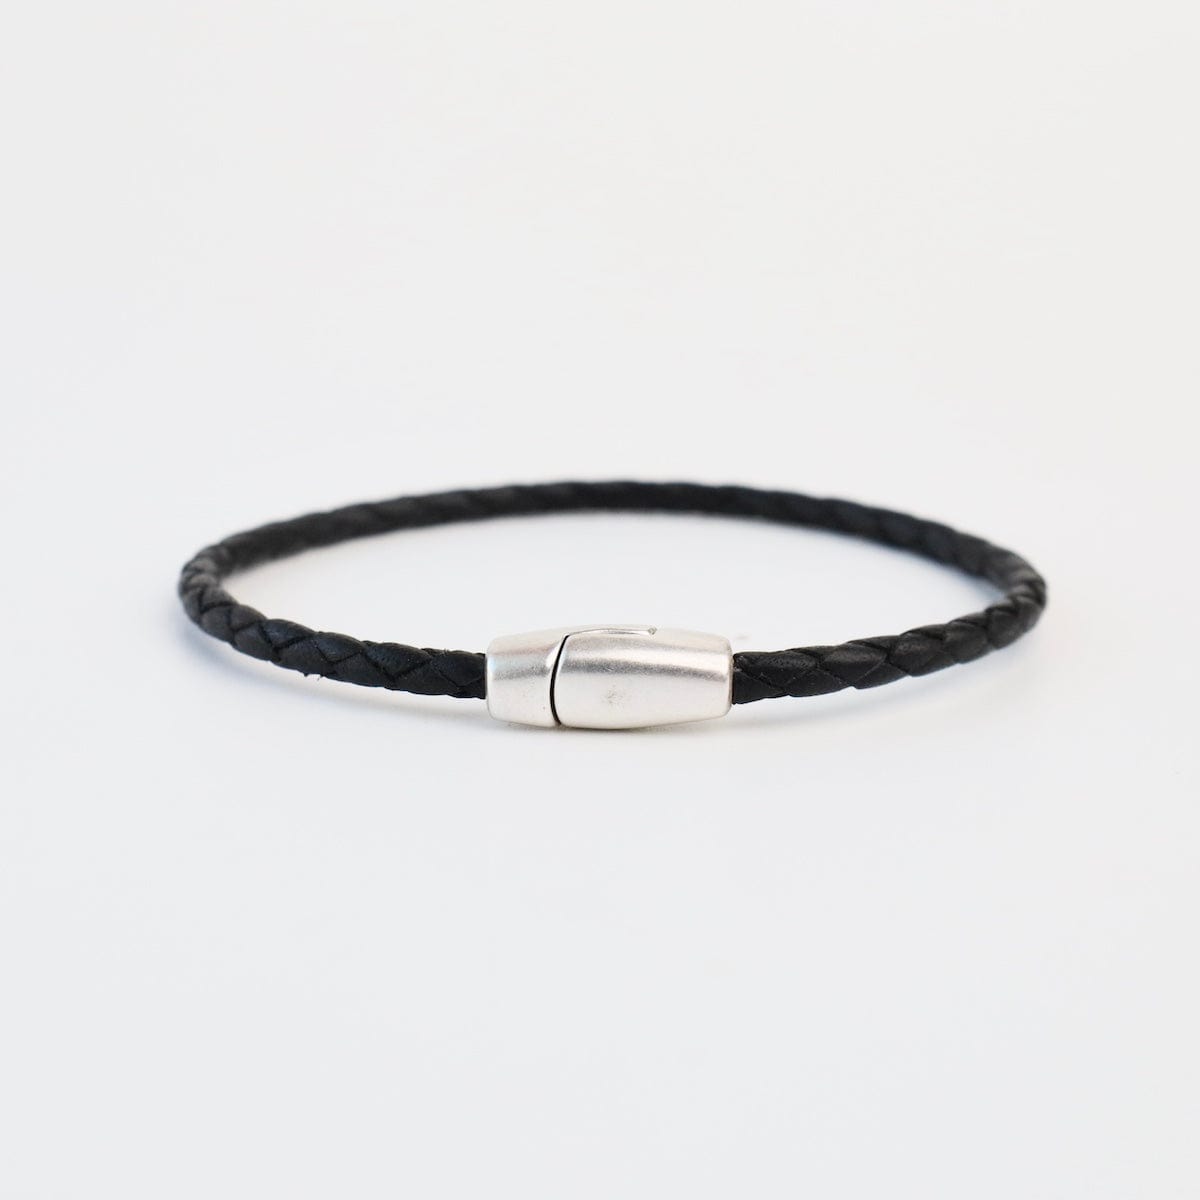 BRC Zoe Braided Black Leather Bracelet - approx 7.5"